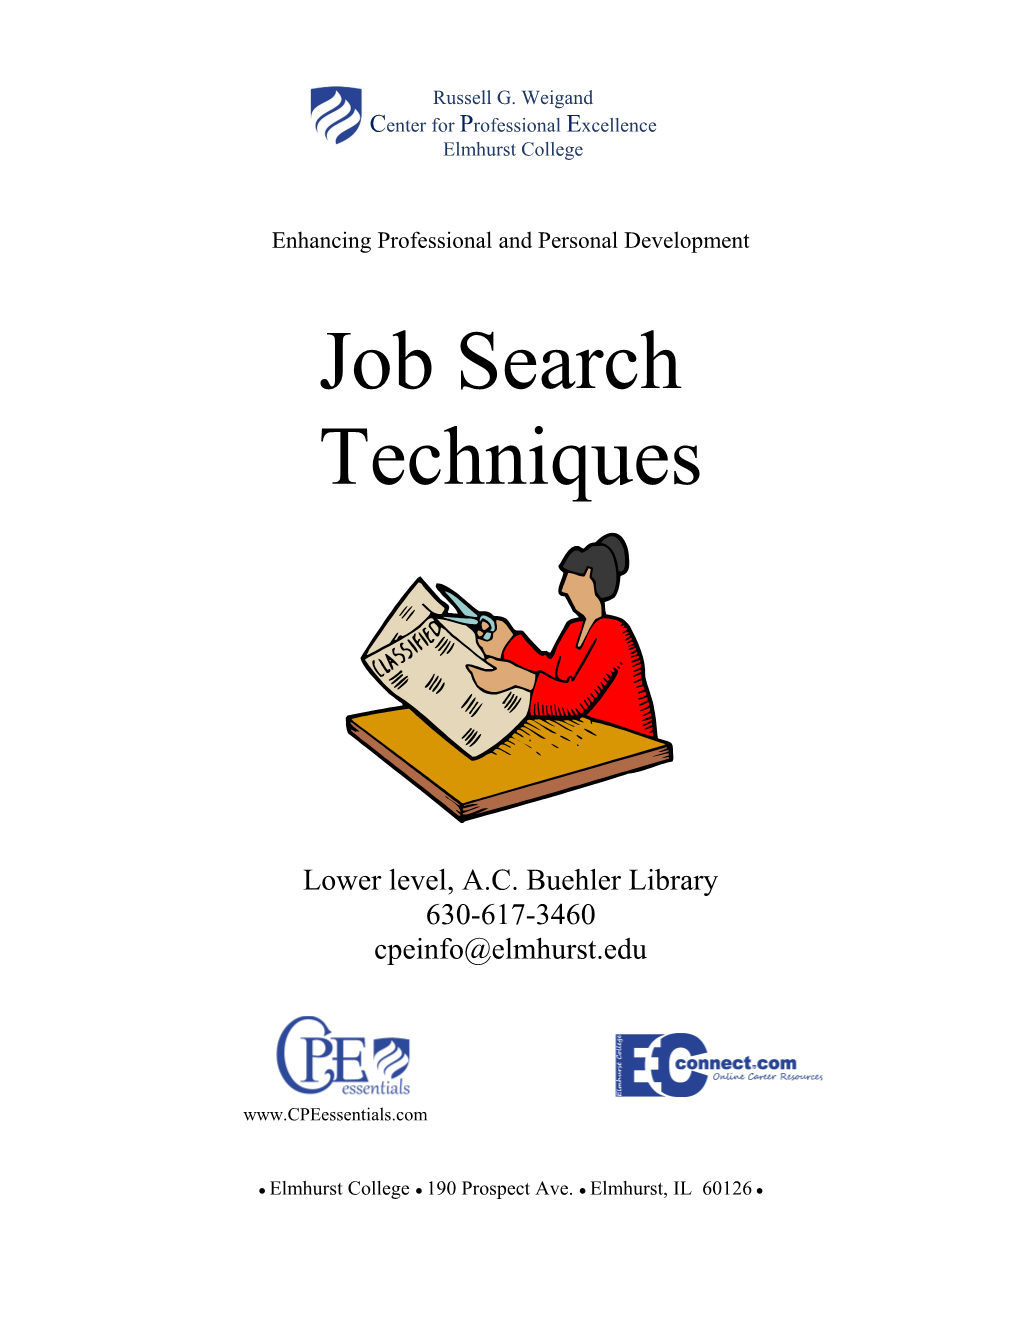 Job Search Techniques